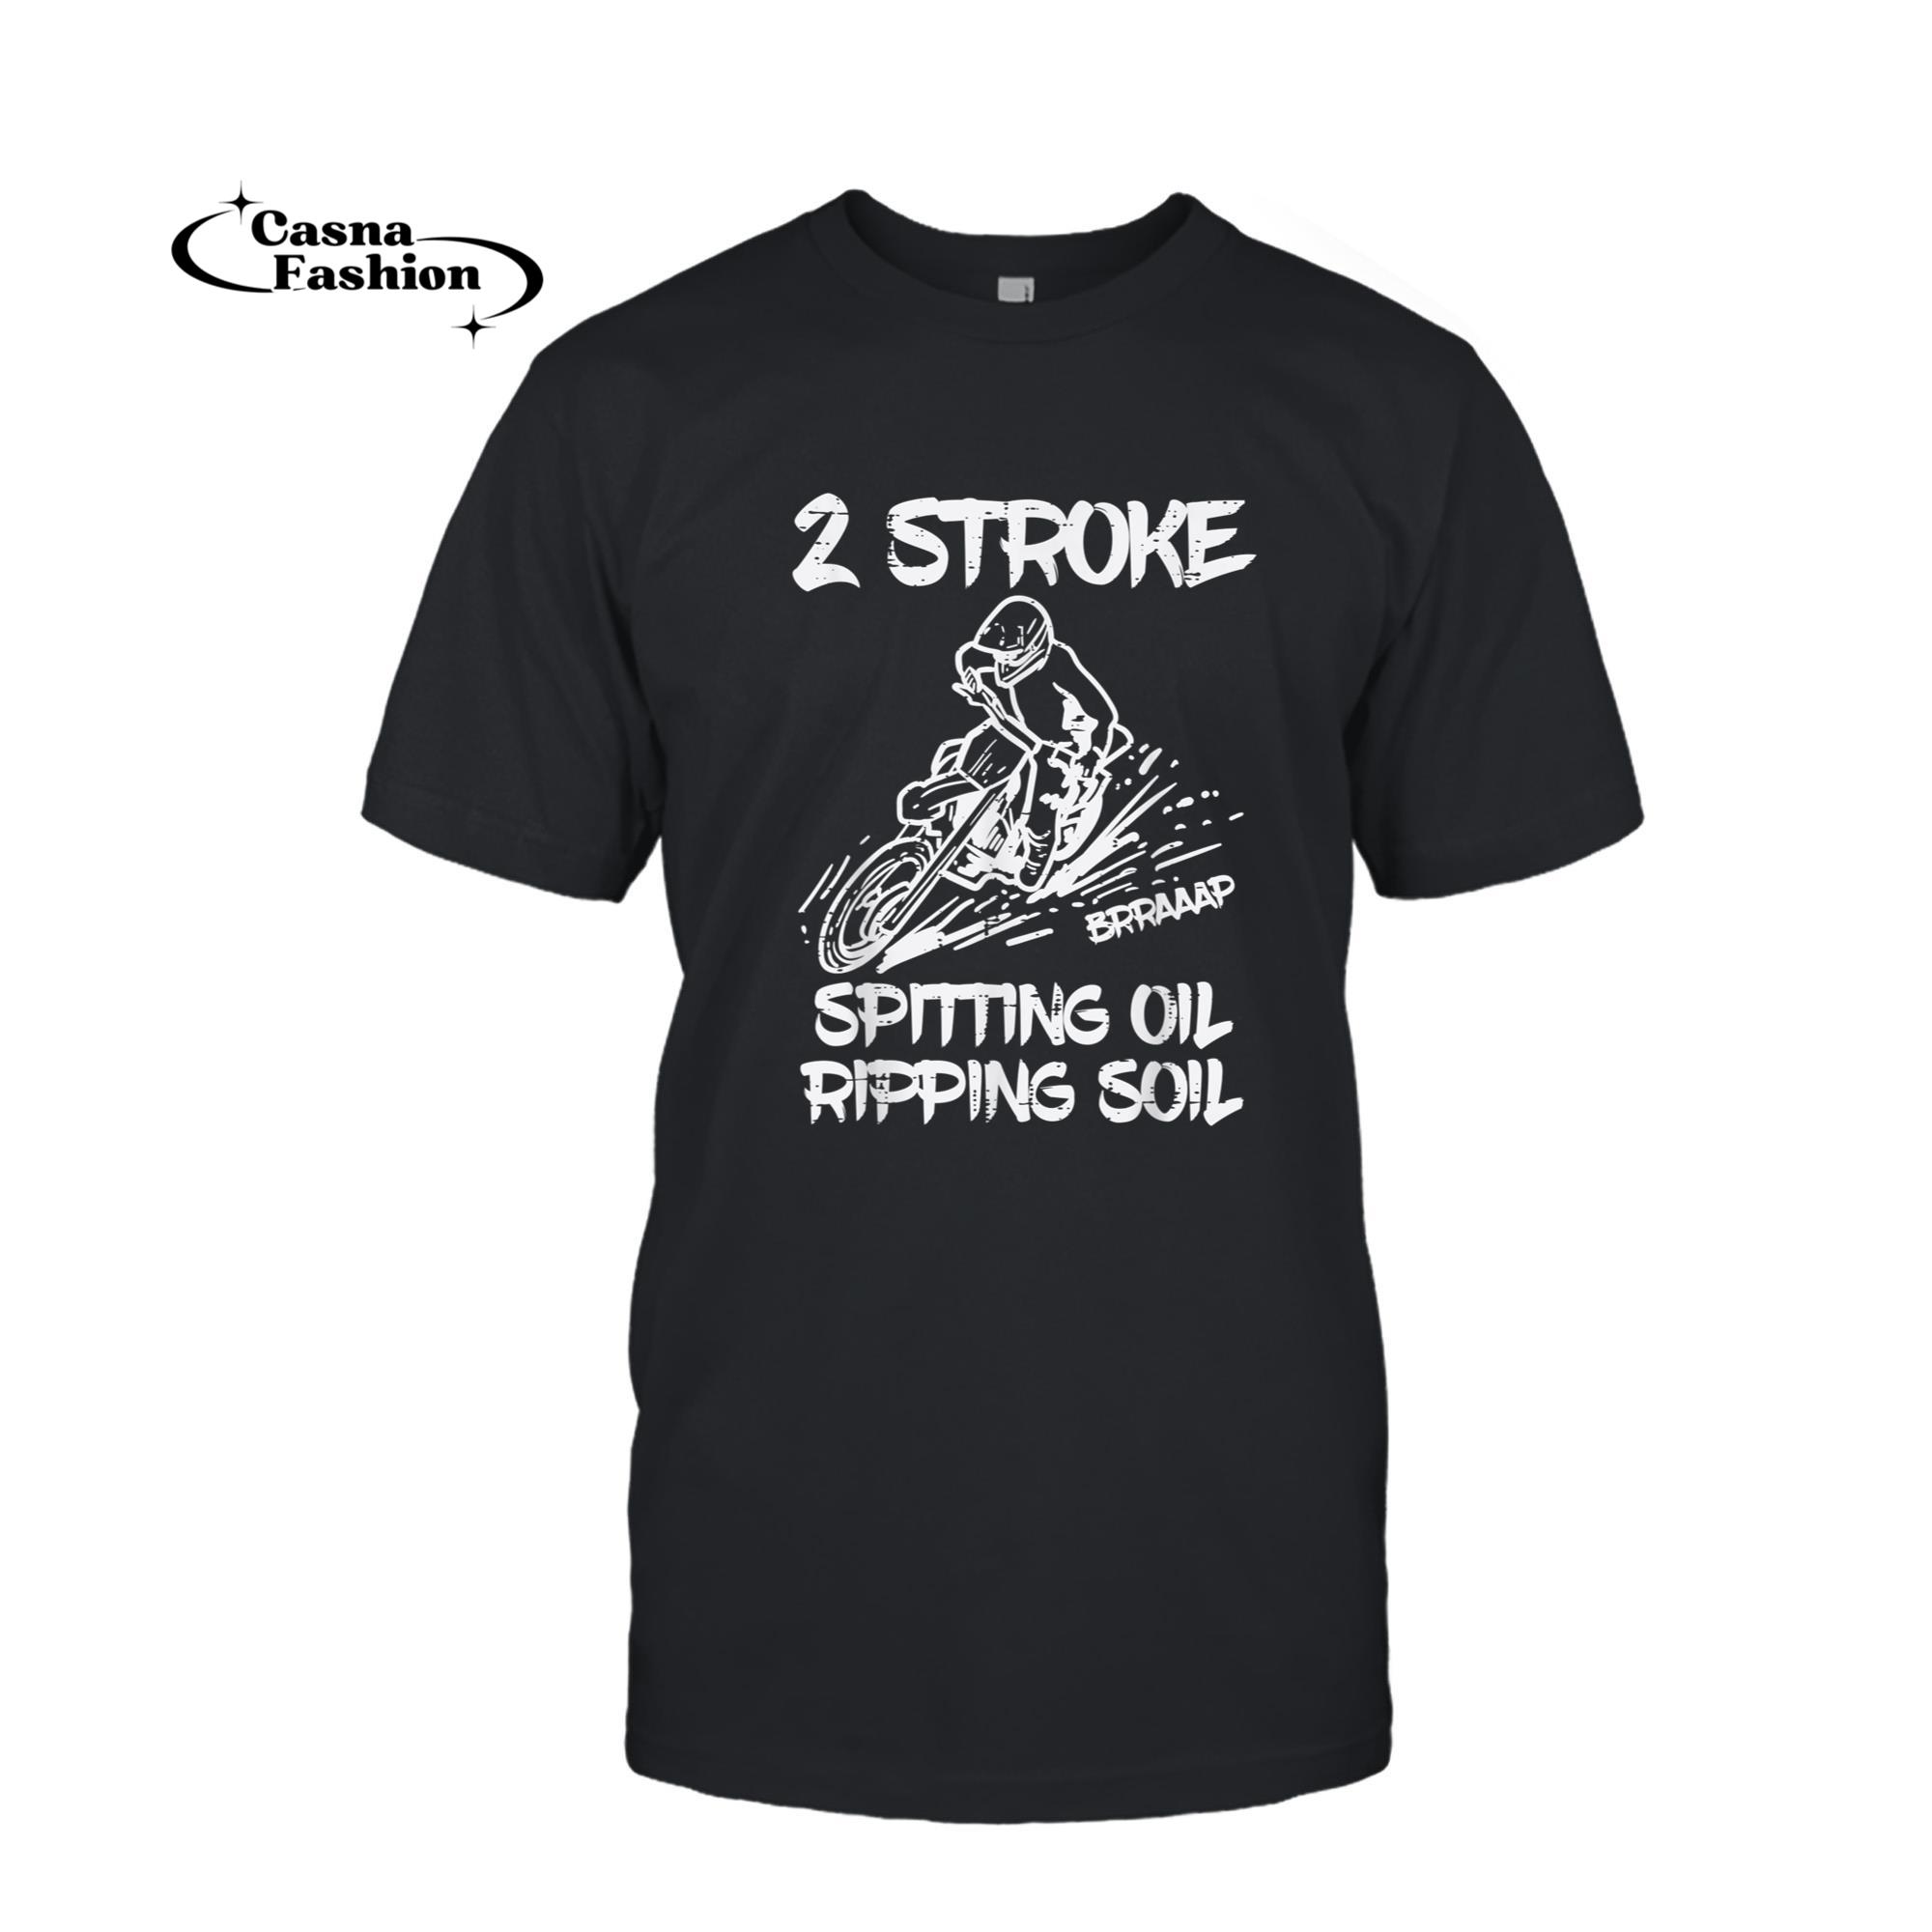 casnafashion_T-shirt_2 Stroke Dirt Bike Motocross Motorcycle Biker Men Women Kids T-Shirt_T-shirt_Black